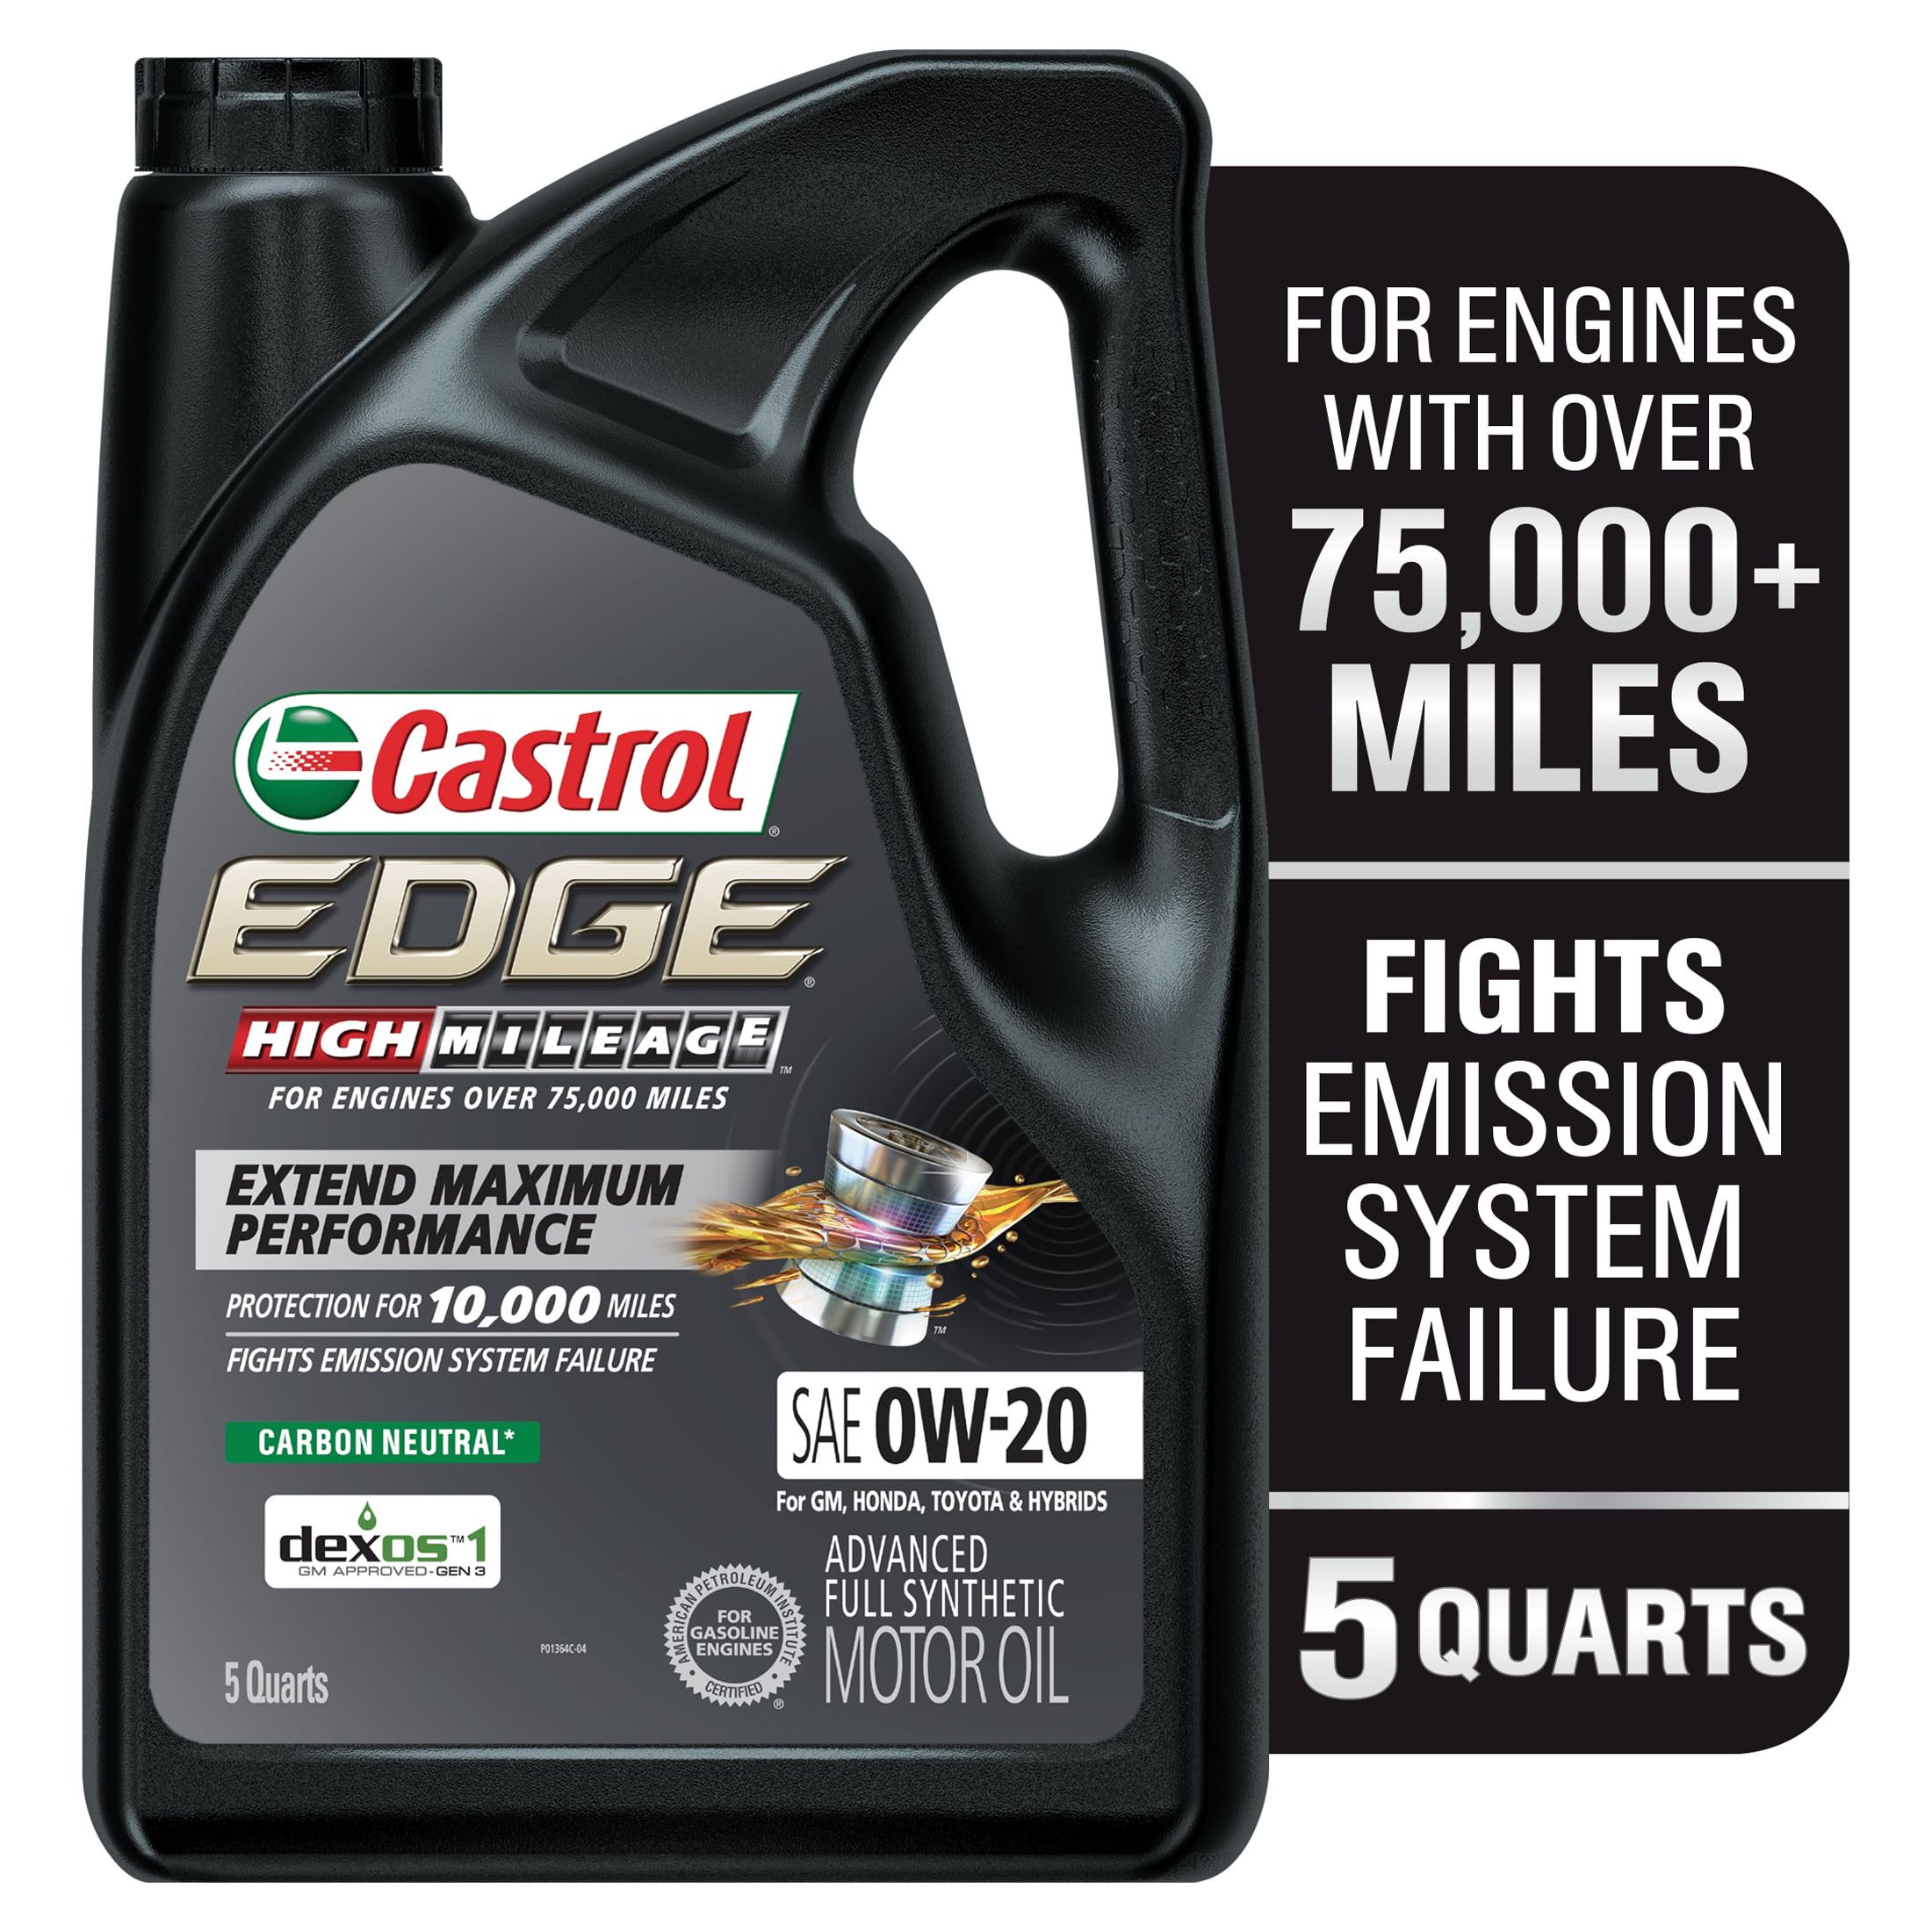 Castrol Edge High Mileage 0W-20 Advanced Full Synthetic Motor Oil, 5 Quarts - image 3 of 10